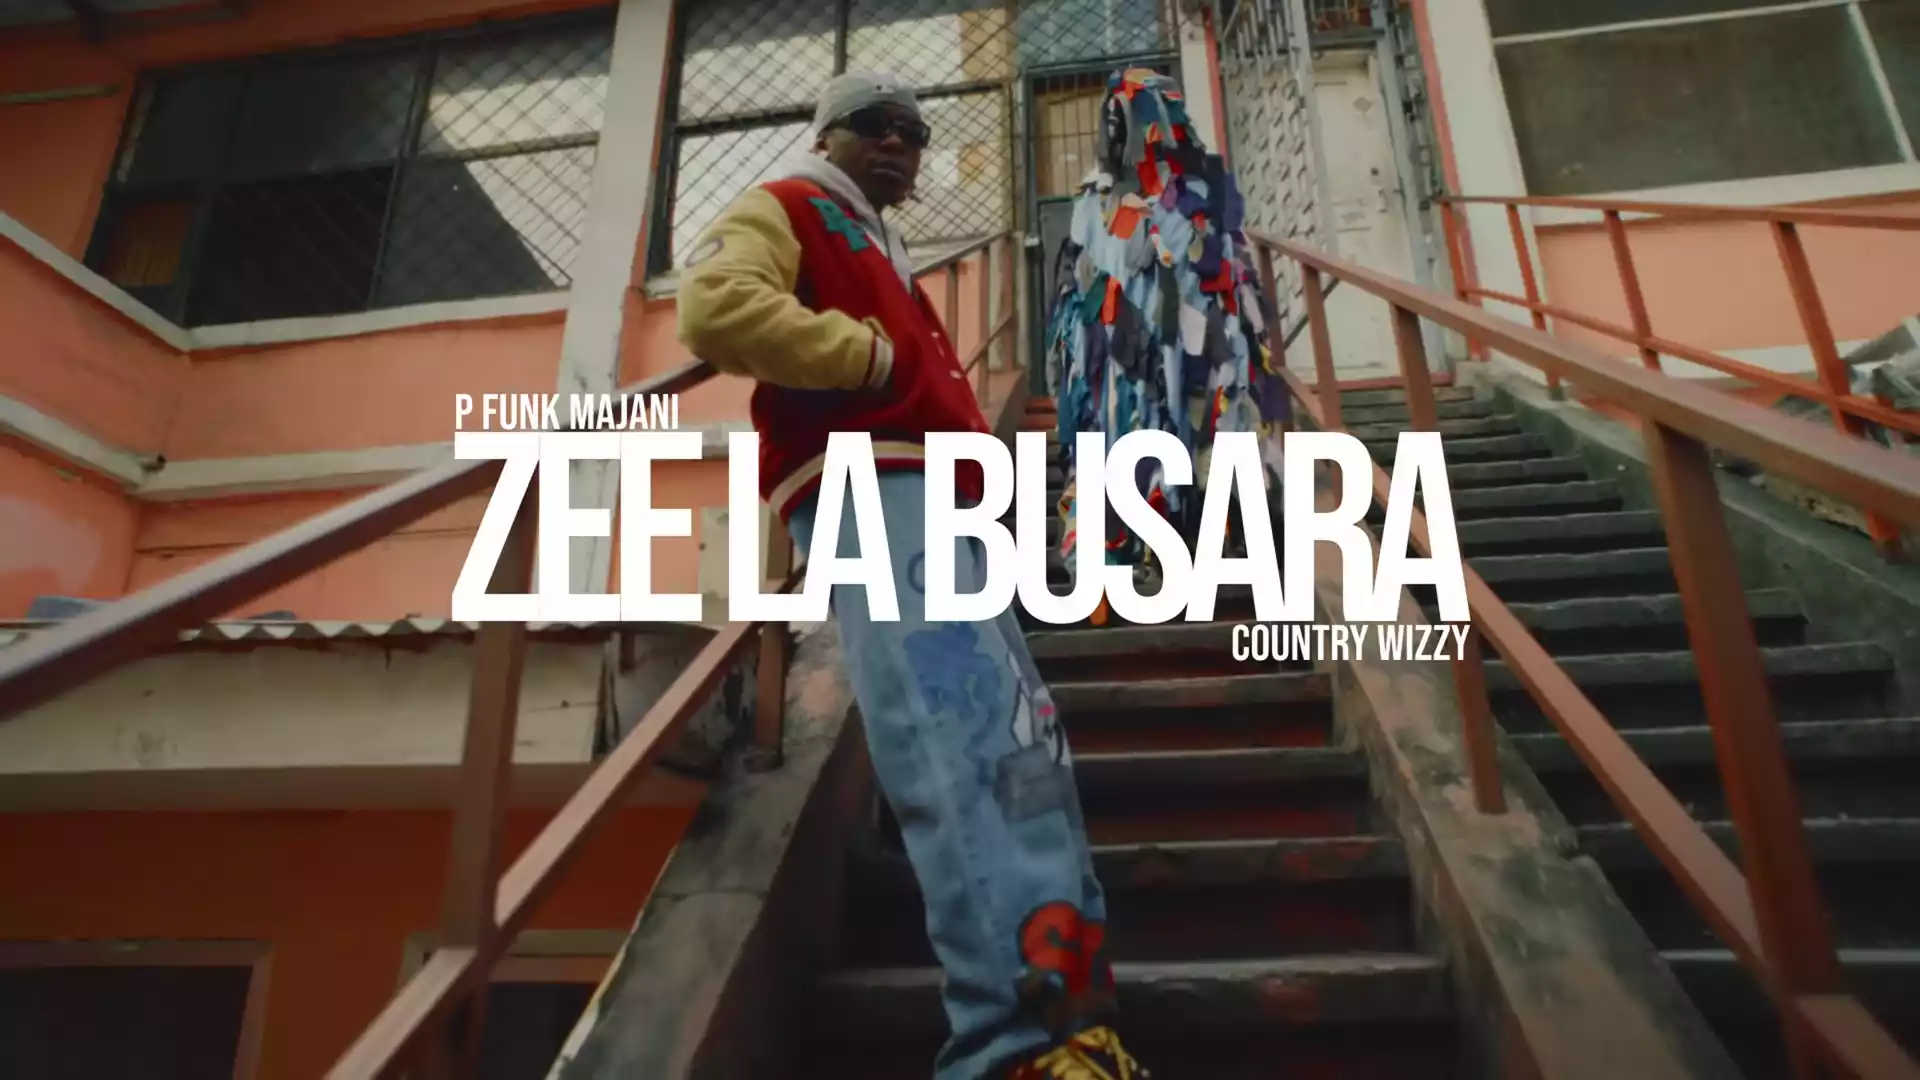 P Funk Majani ft. Country Wizzy Zee La Busara Official Video 0 4 screenshot